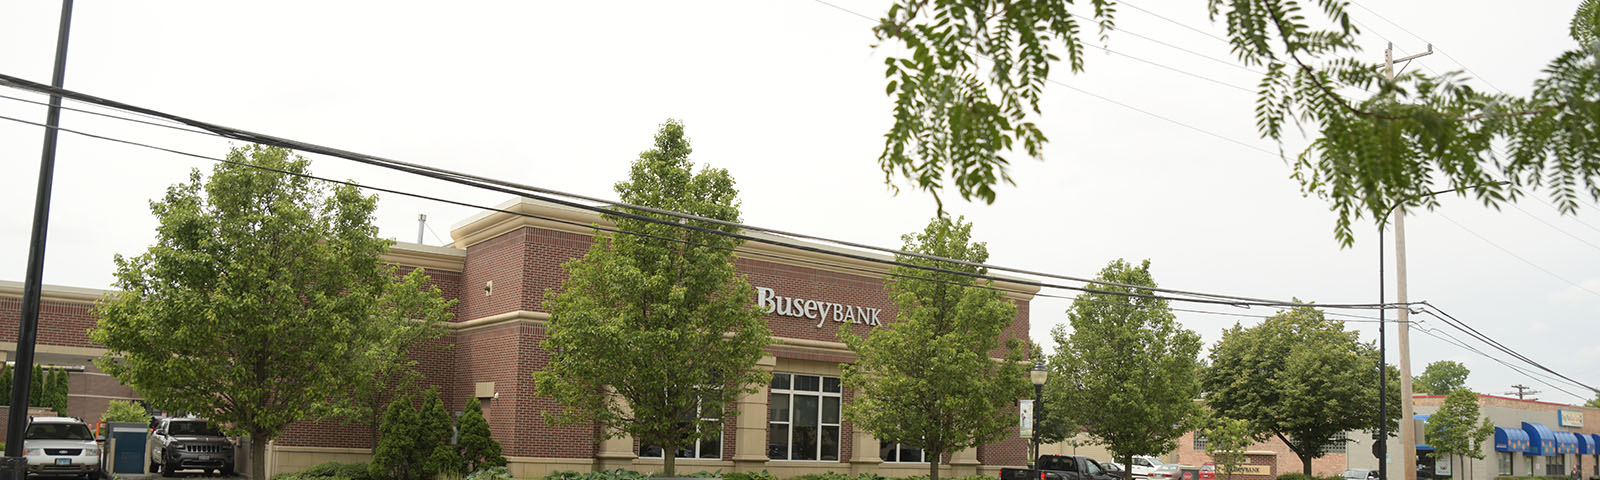 Busey Bank Mount Prospect Service Center